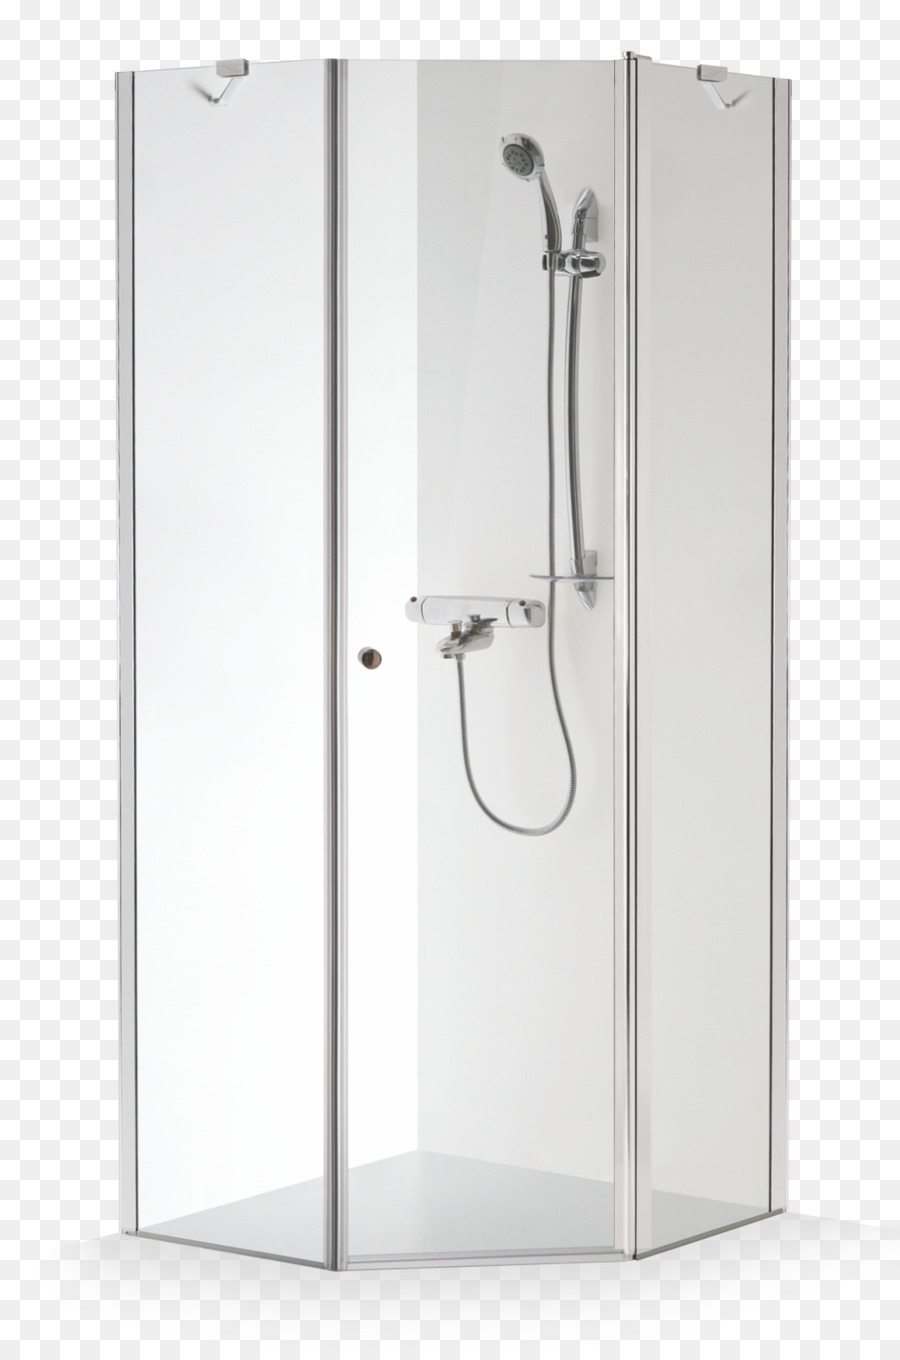 Shower Bathroom Hansgrohe Door - 199 png download - 1064*1594 - Free Transparent Shower png Download.